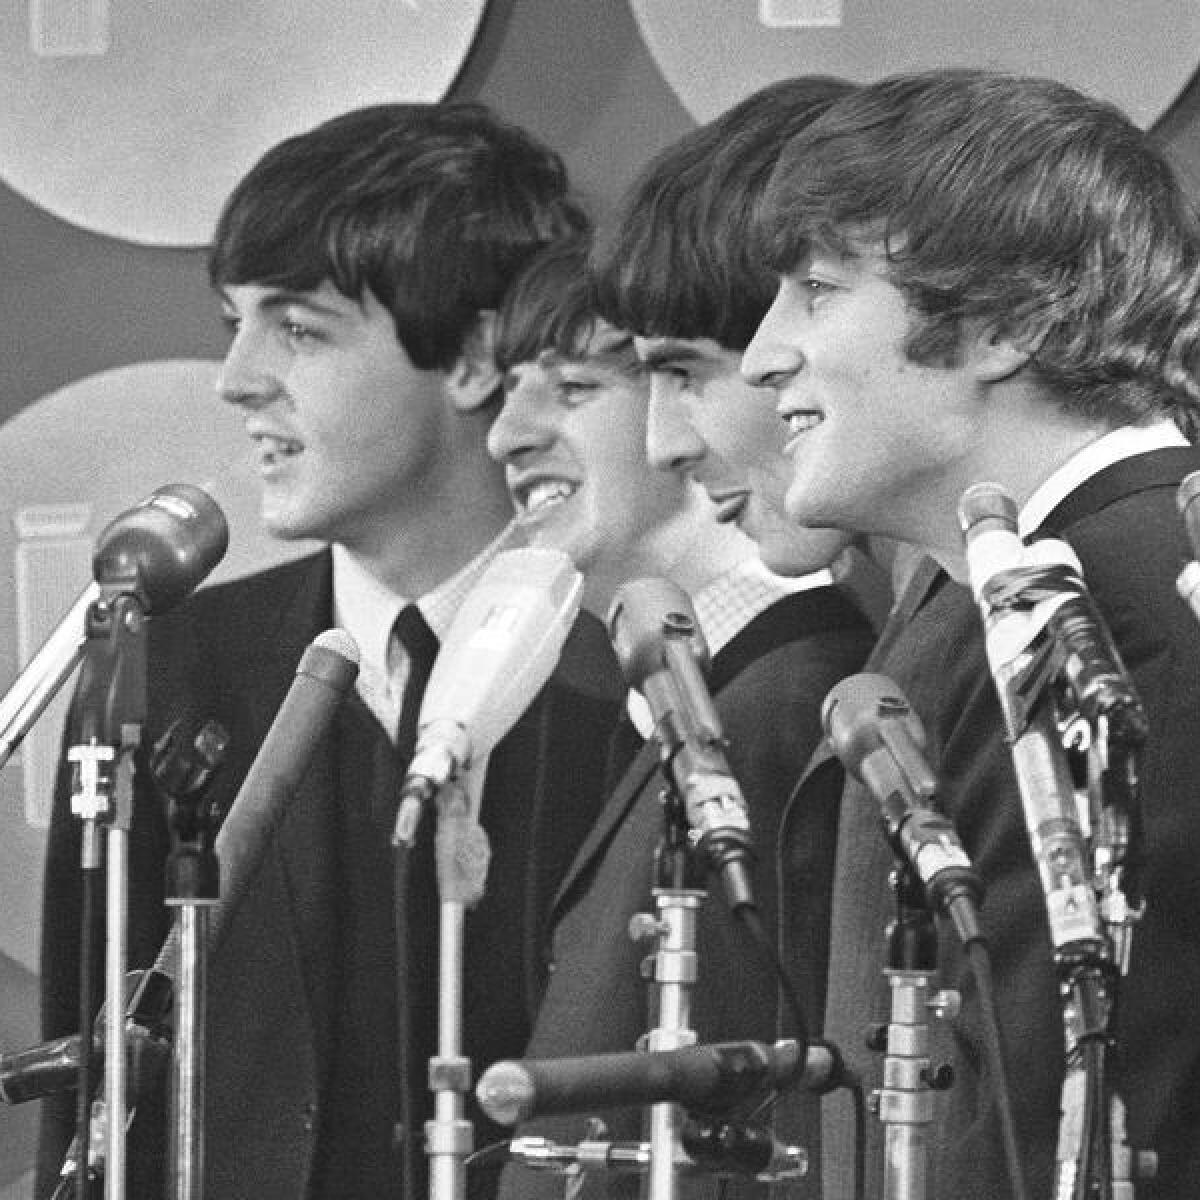 The Beatles in New York in 1964